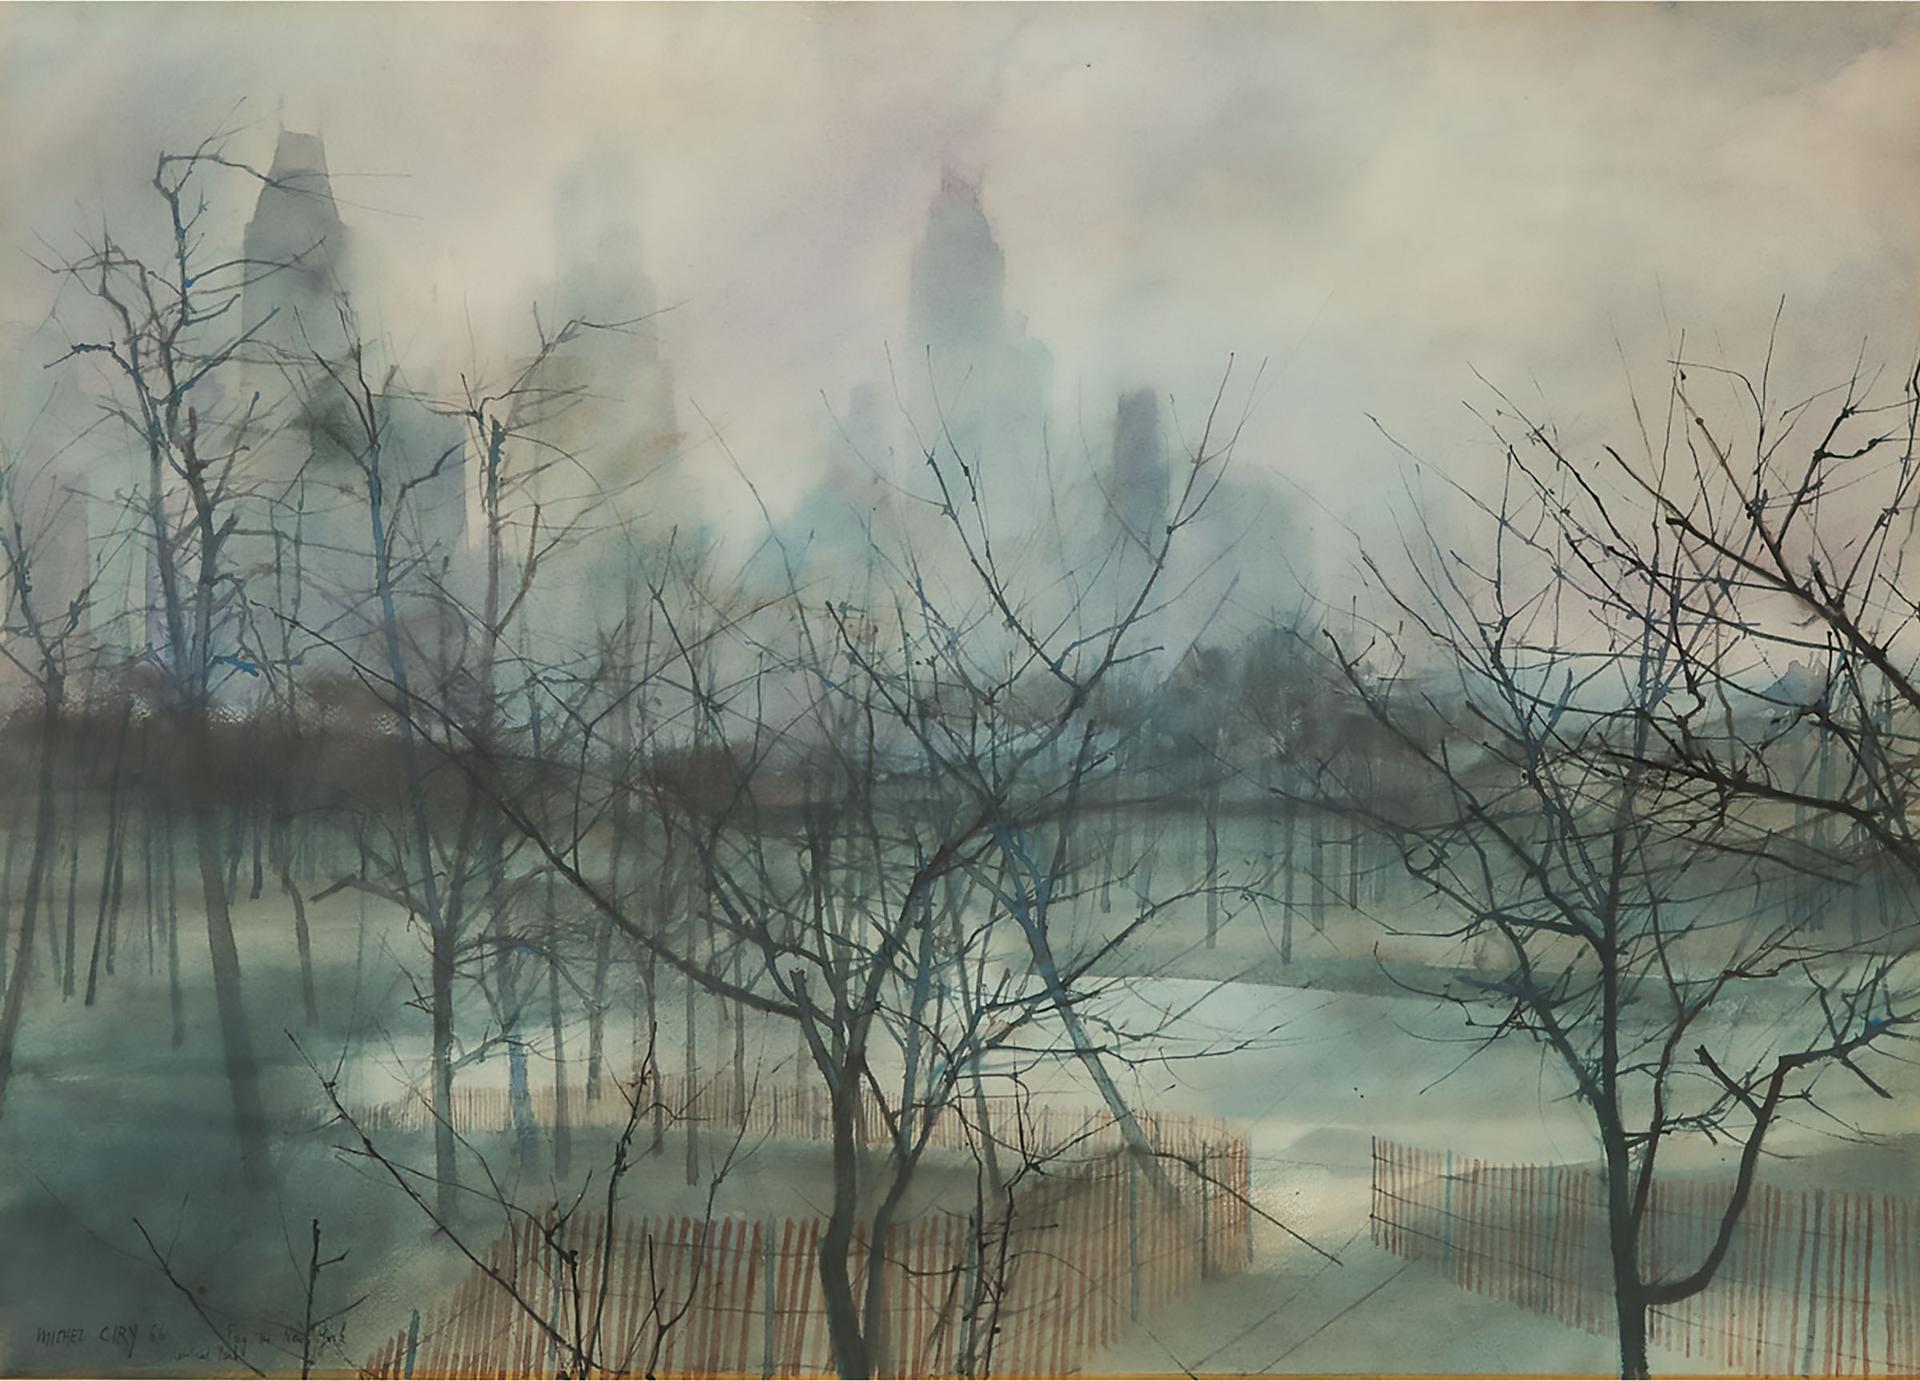 Michael Ciry (1919-2018) - Fog In New York, Central Park, 1966